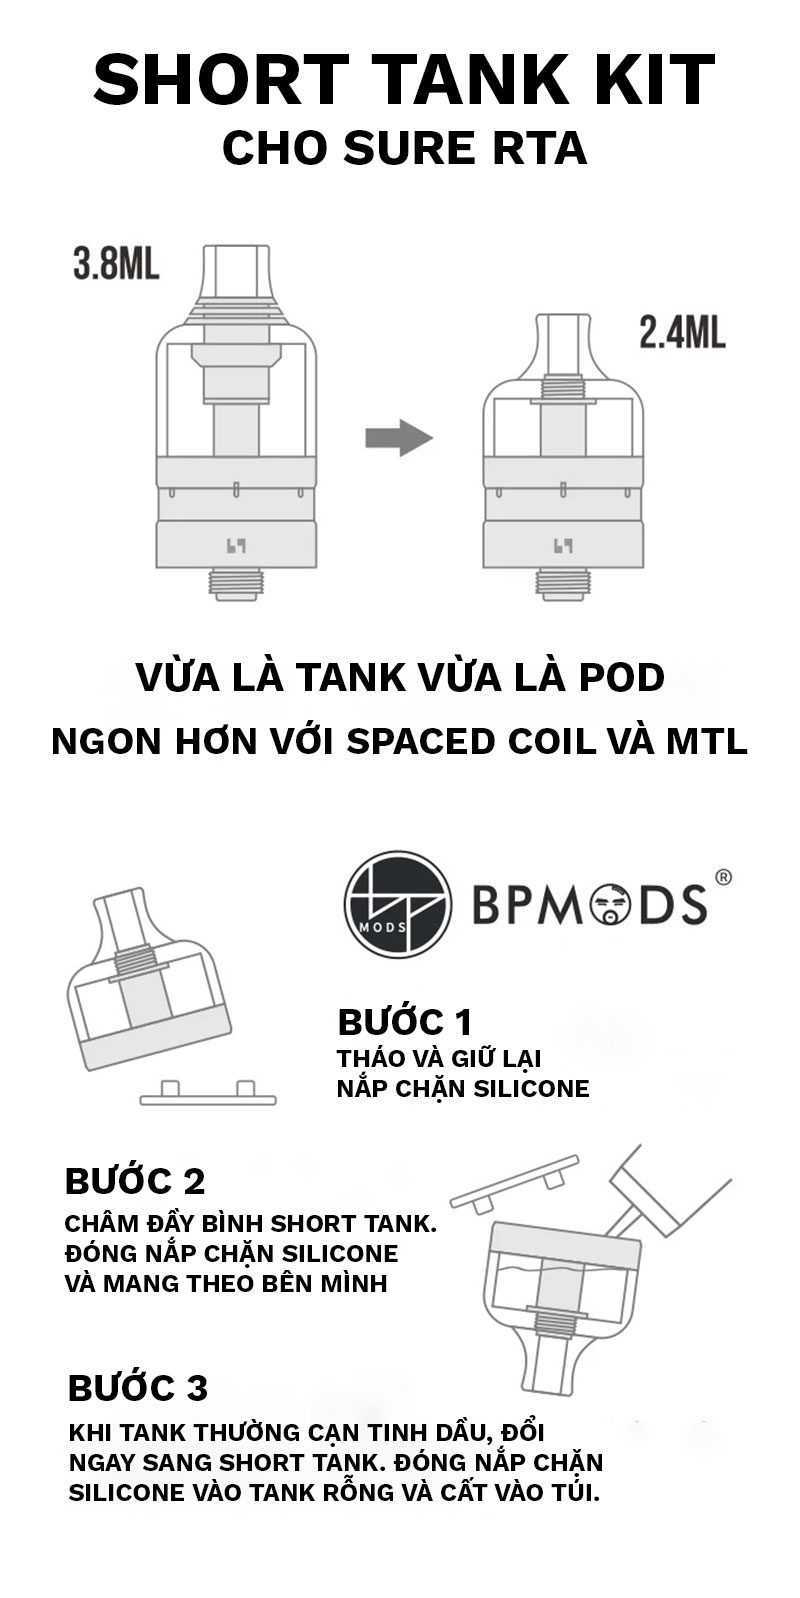 BP Mods Sure RTA short tank kit